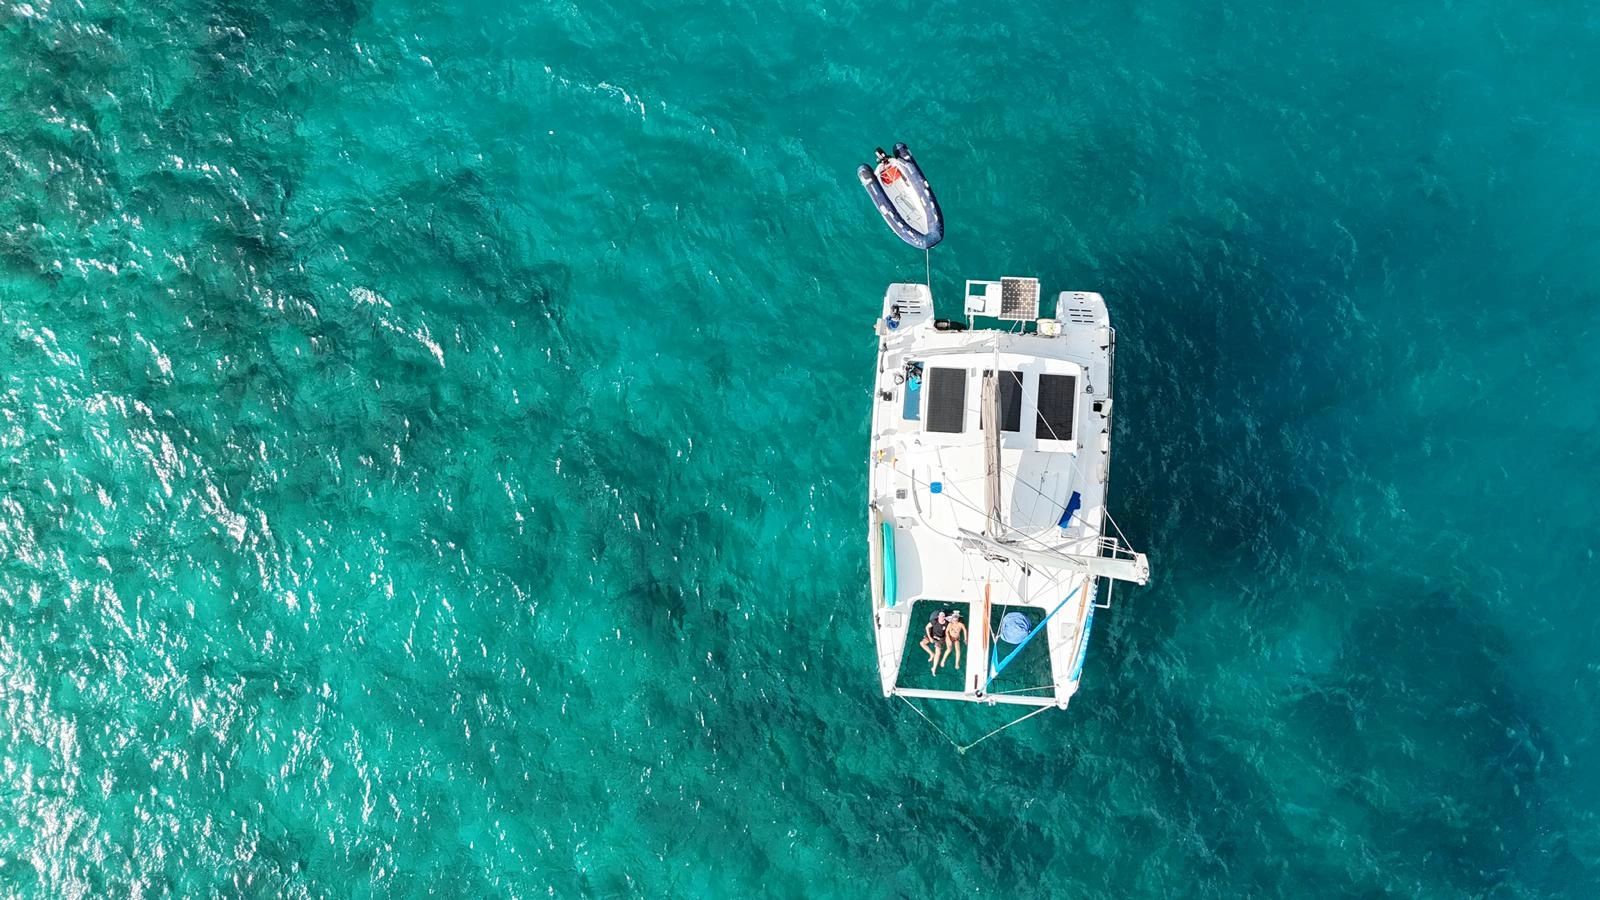 Catamaran Venezia 42 for all-inclusive sailing packages for adventure seekers in Panama, Caribbean.